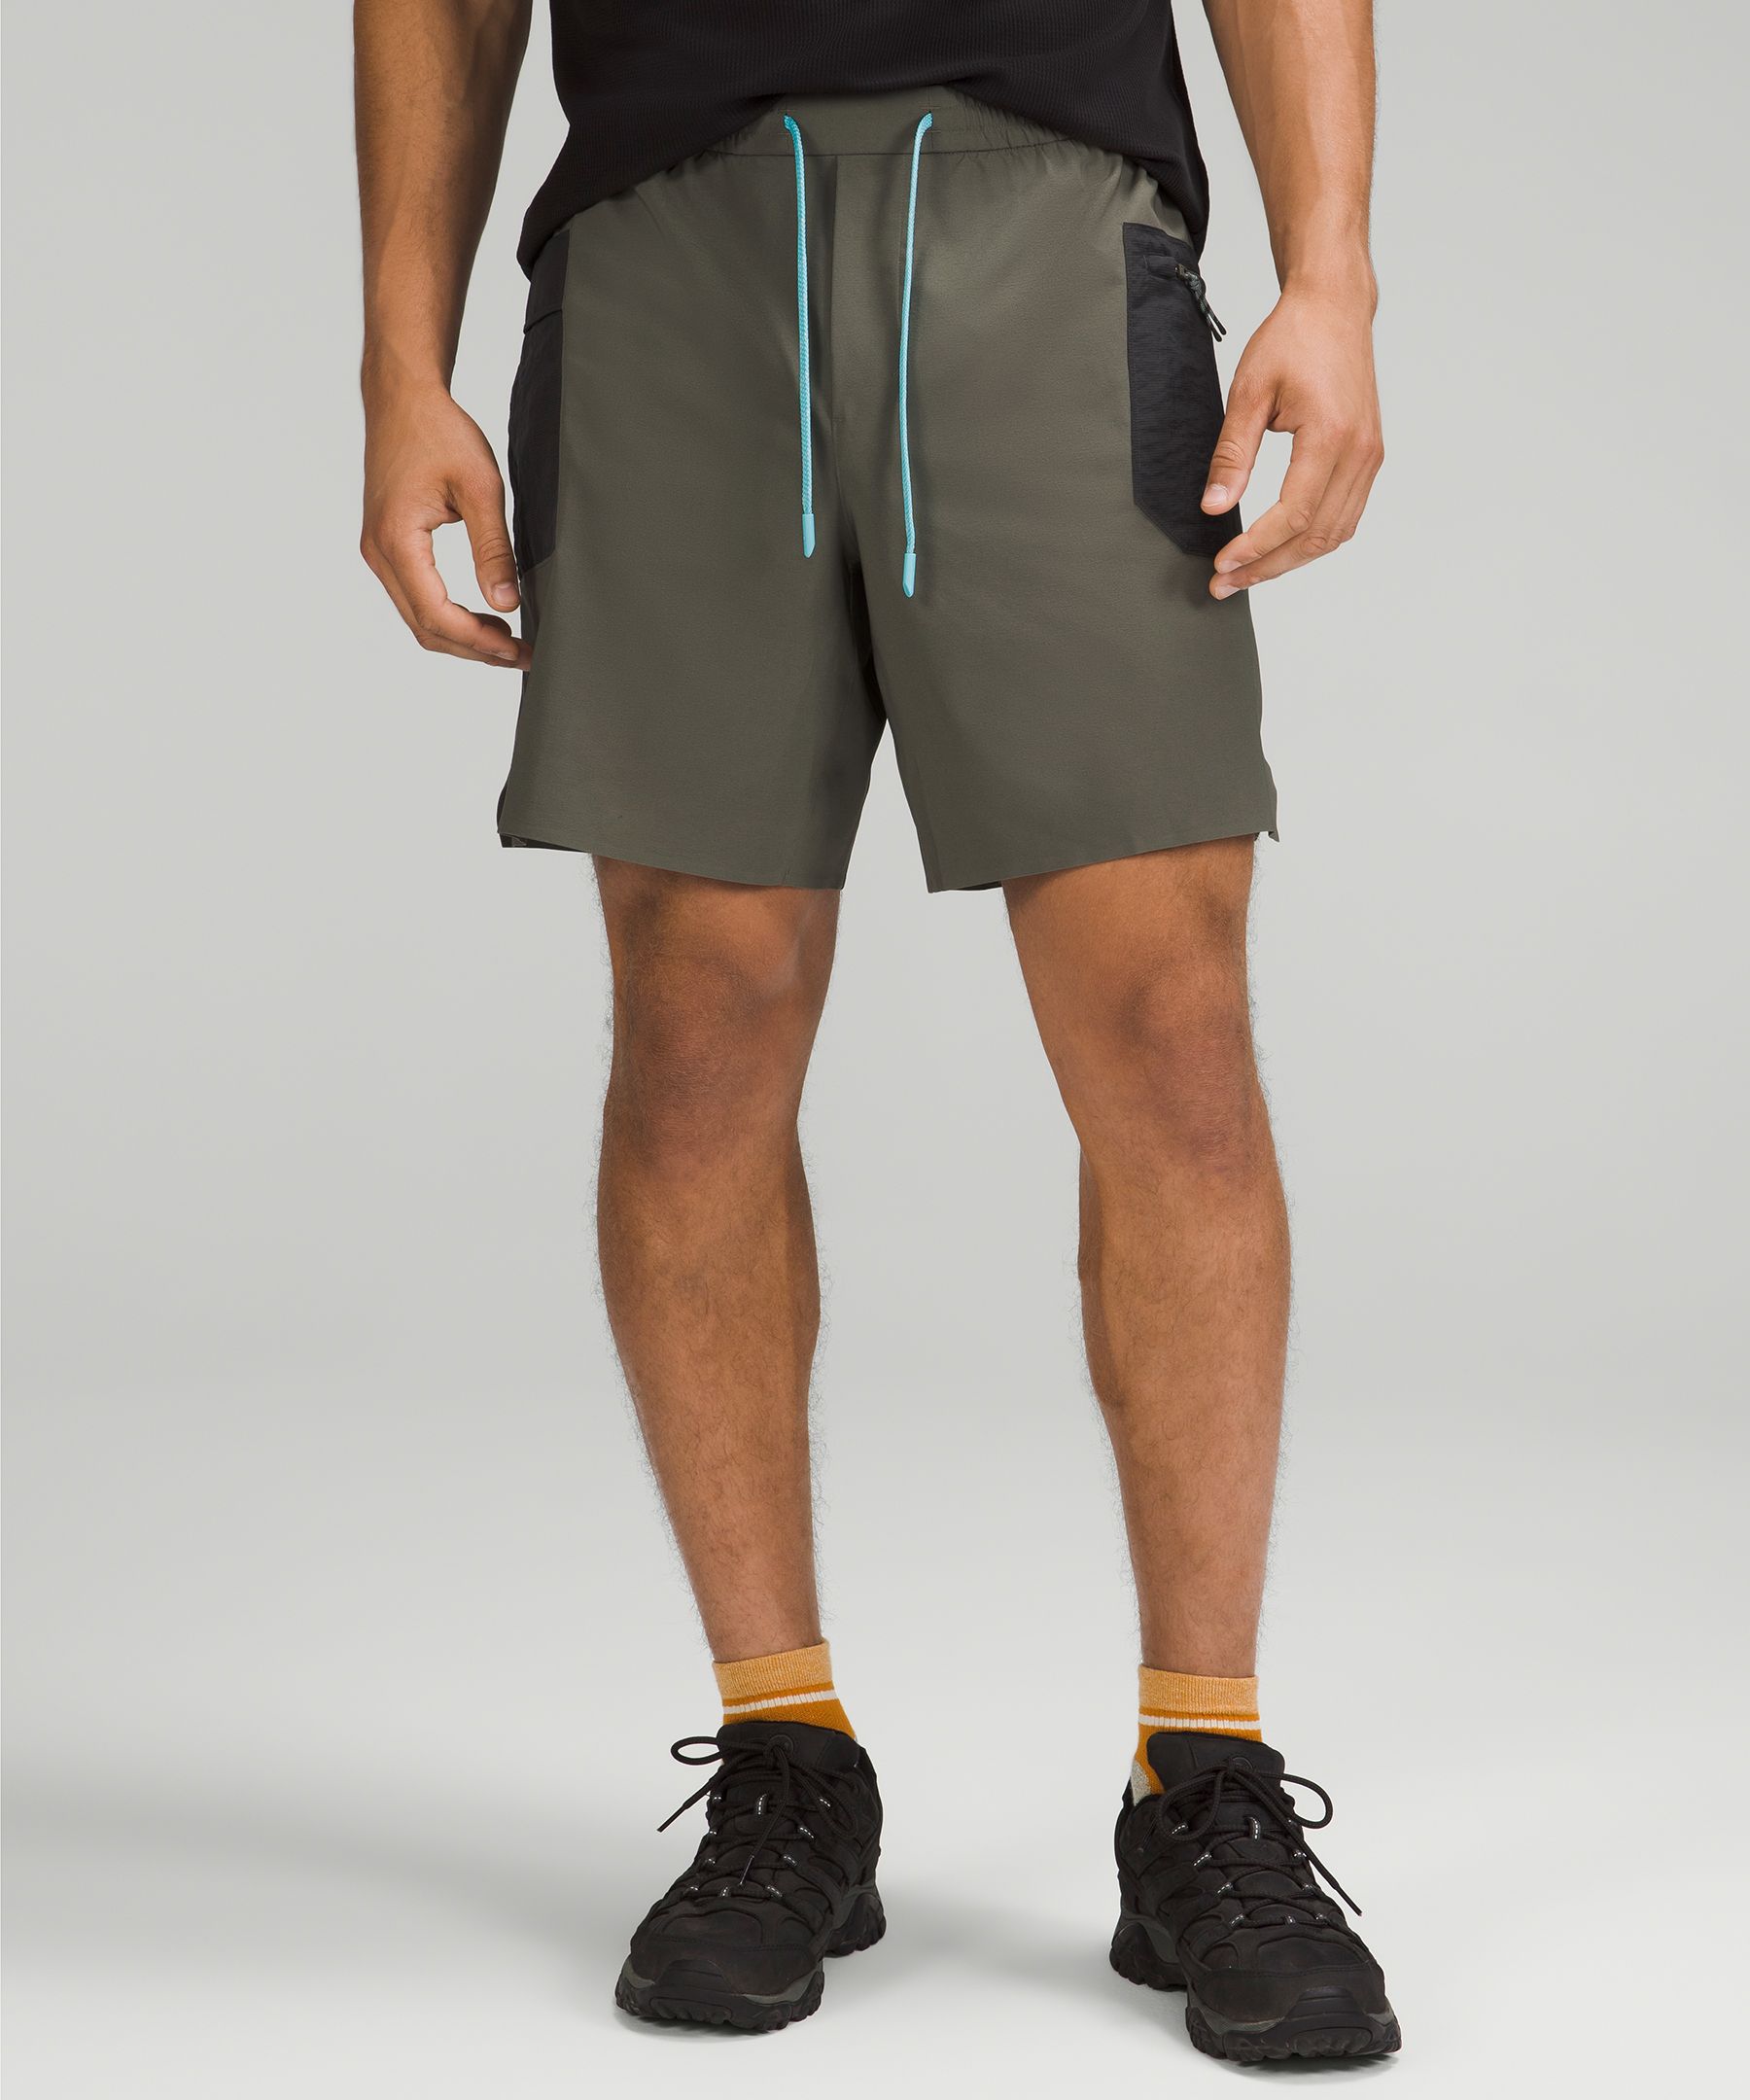 Lululemon Water-repellent Hiking Shorts 8"